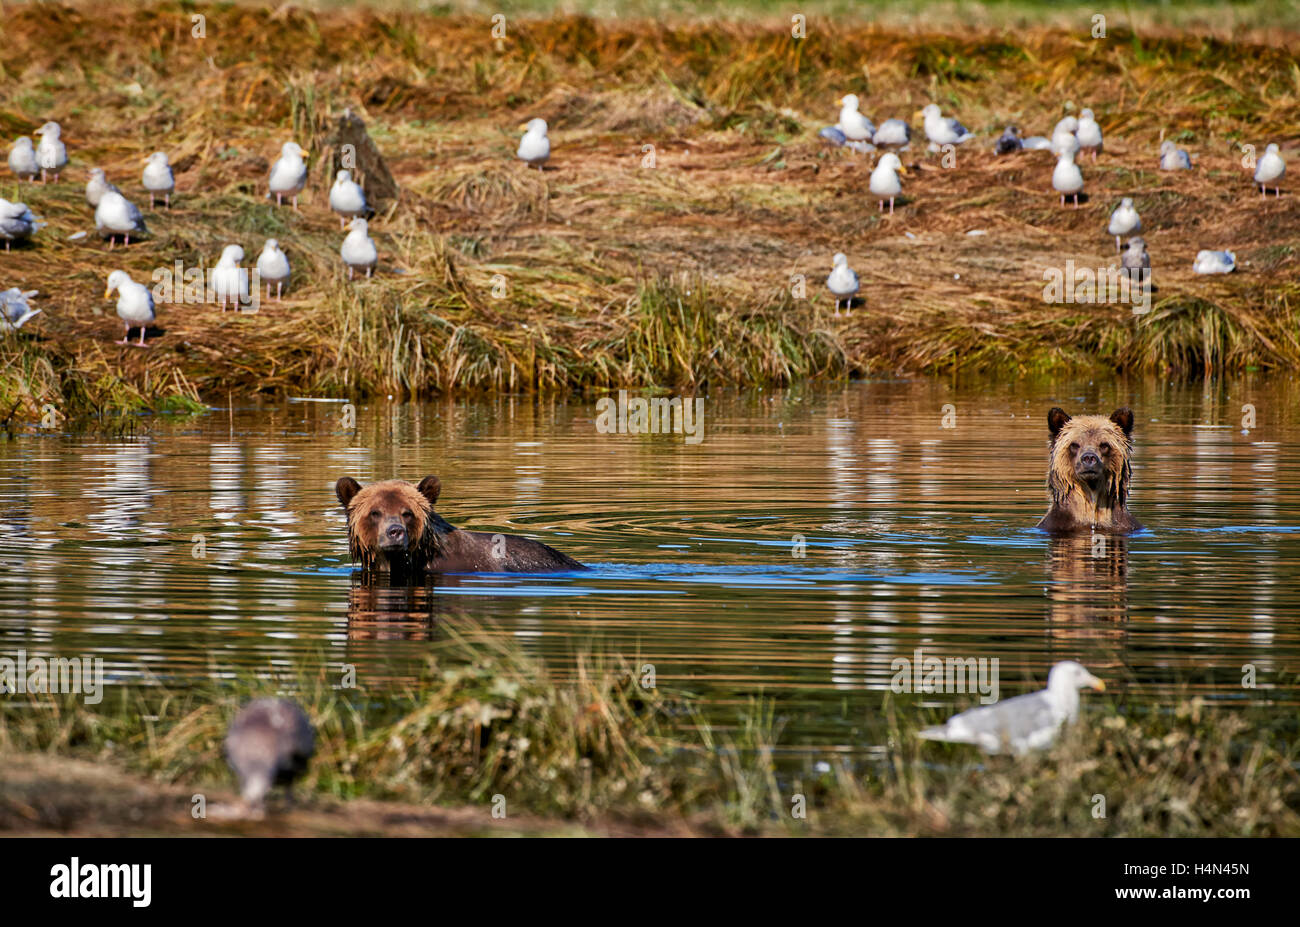 Grizzly trägt Jagd Lachs, Ursus Arctos Horribilis, Great Bear Rainforest, Knight Inlet, British Columbia, Kanada Stockfoto